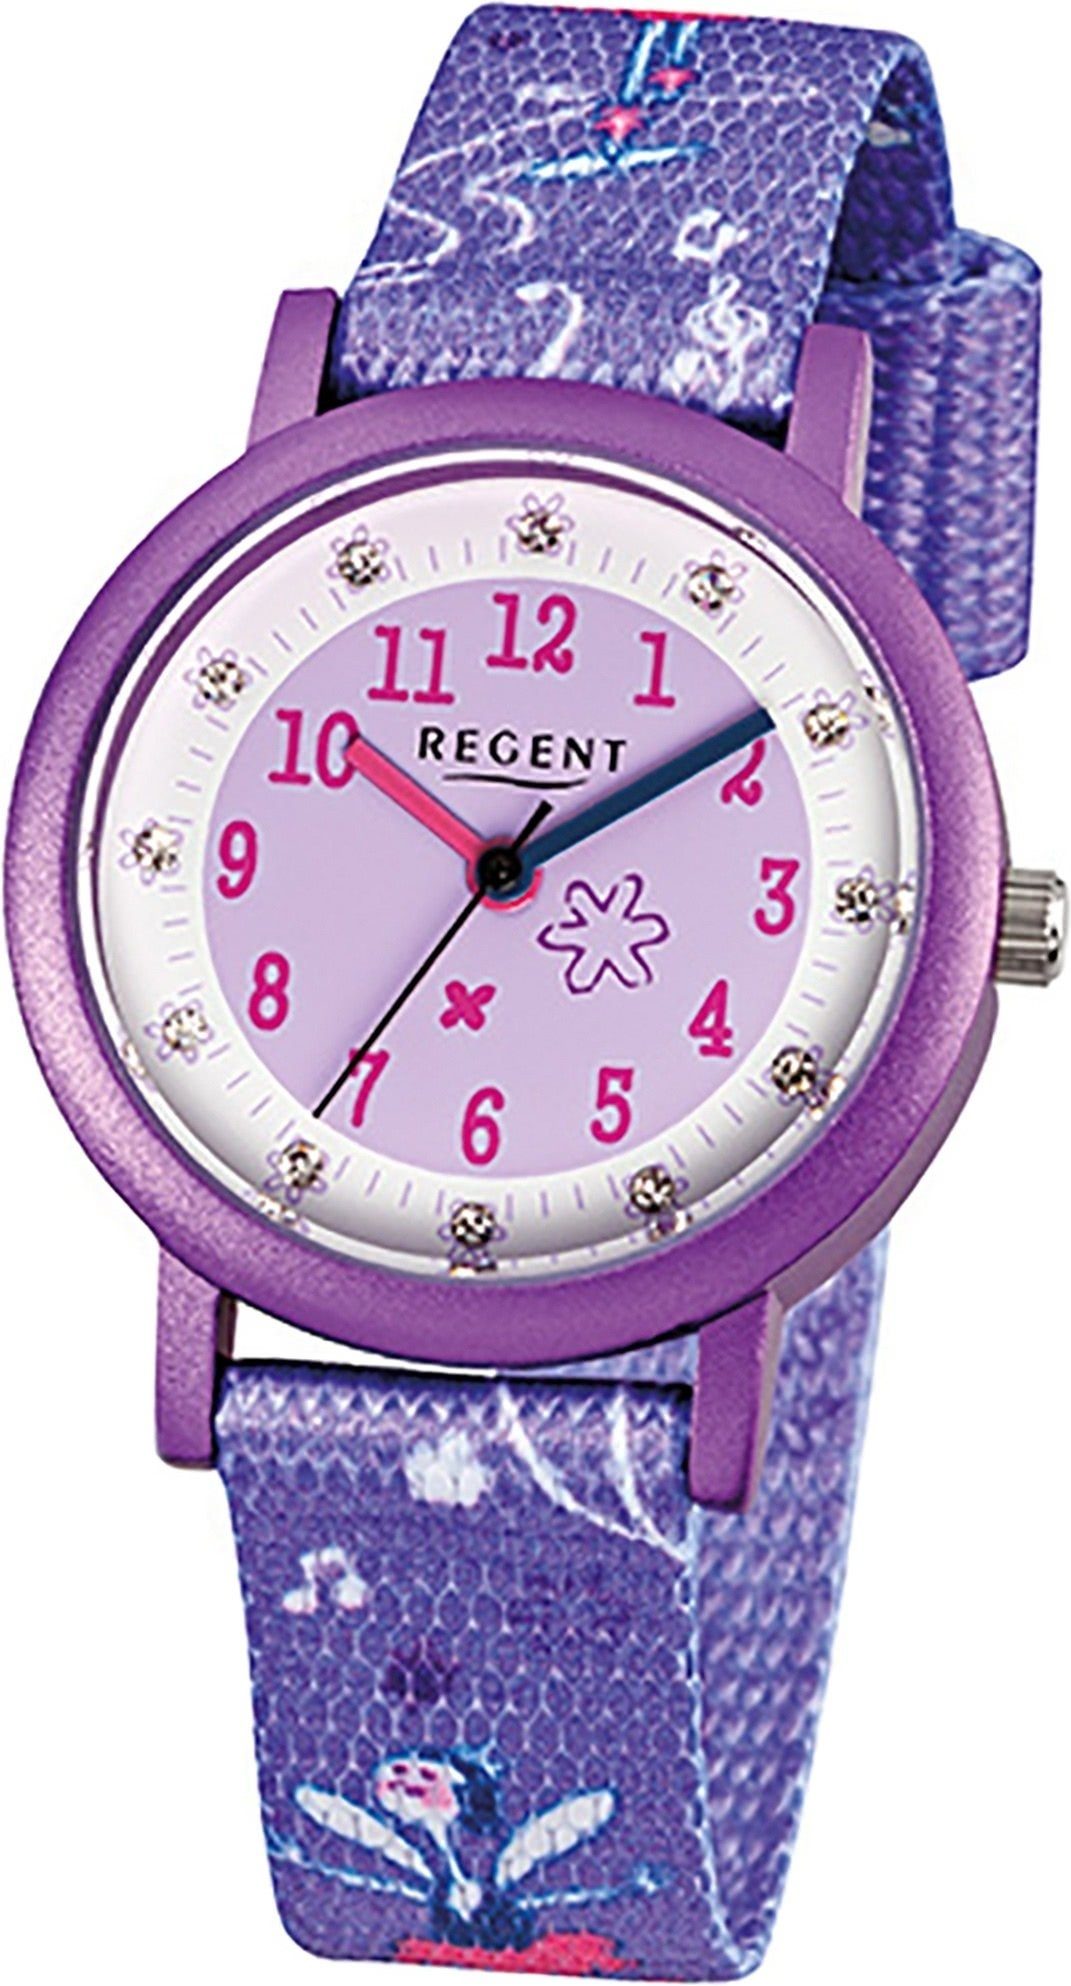 F-486 Textilarmband Textil Kinder rundes Uhr klein Kinderuhr Regent 29mm) Quarzuhr (ca. Gehäuse, lila, Regent Quarzuhr,